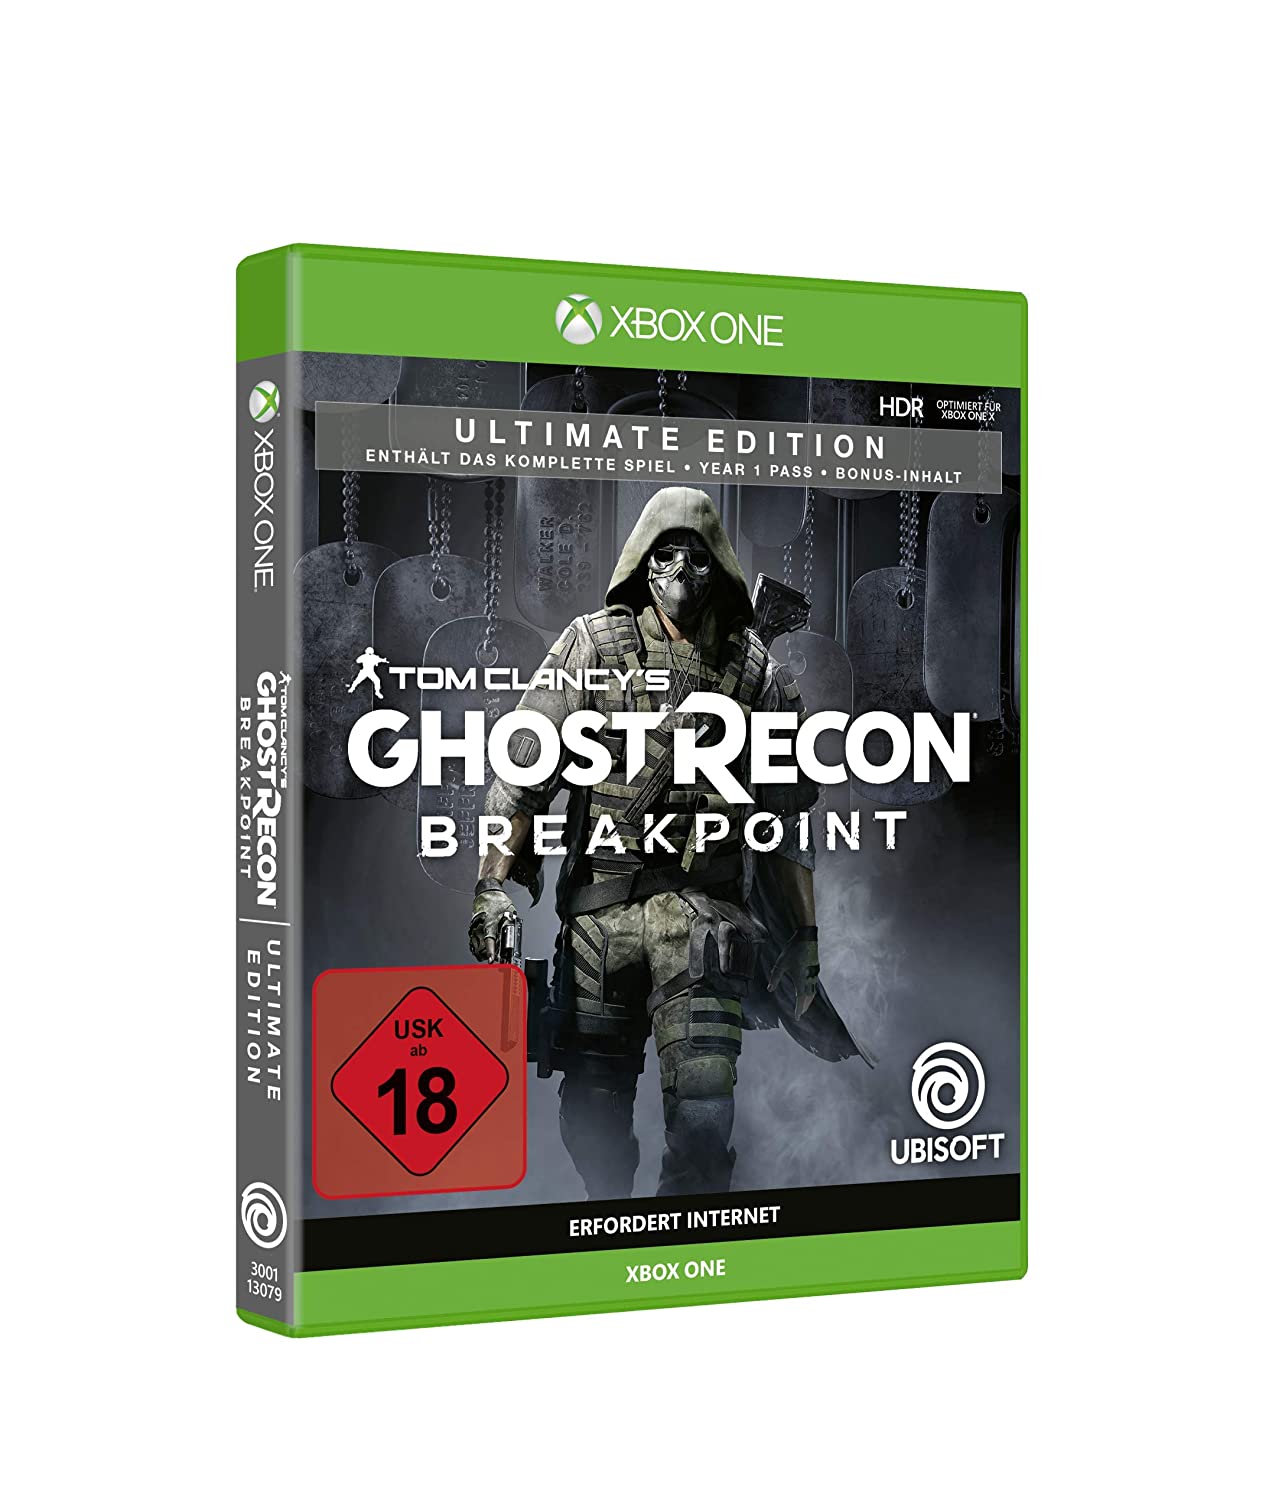 Tom clancy s ultimate edition. Ghost Recon breakpoint Ultimate Edition. Ghost Recon breakpoint Xbox. Ghost Recon breakpoint Ultimate Edition что входит. Костюм собрать в Tom Clancy s Ghost Recon на Xbox one.